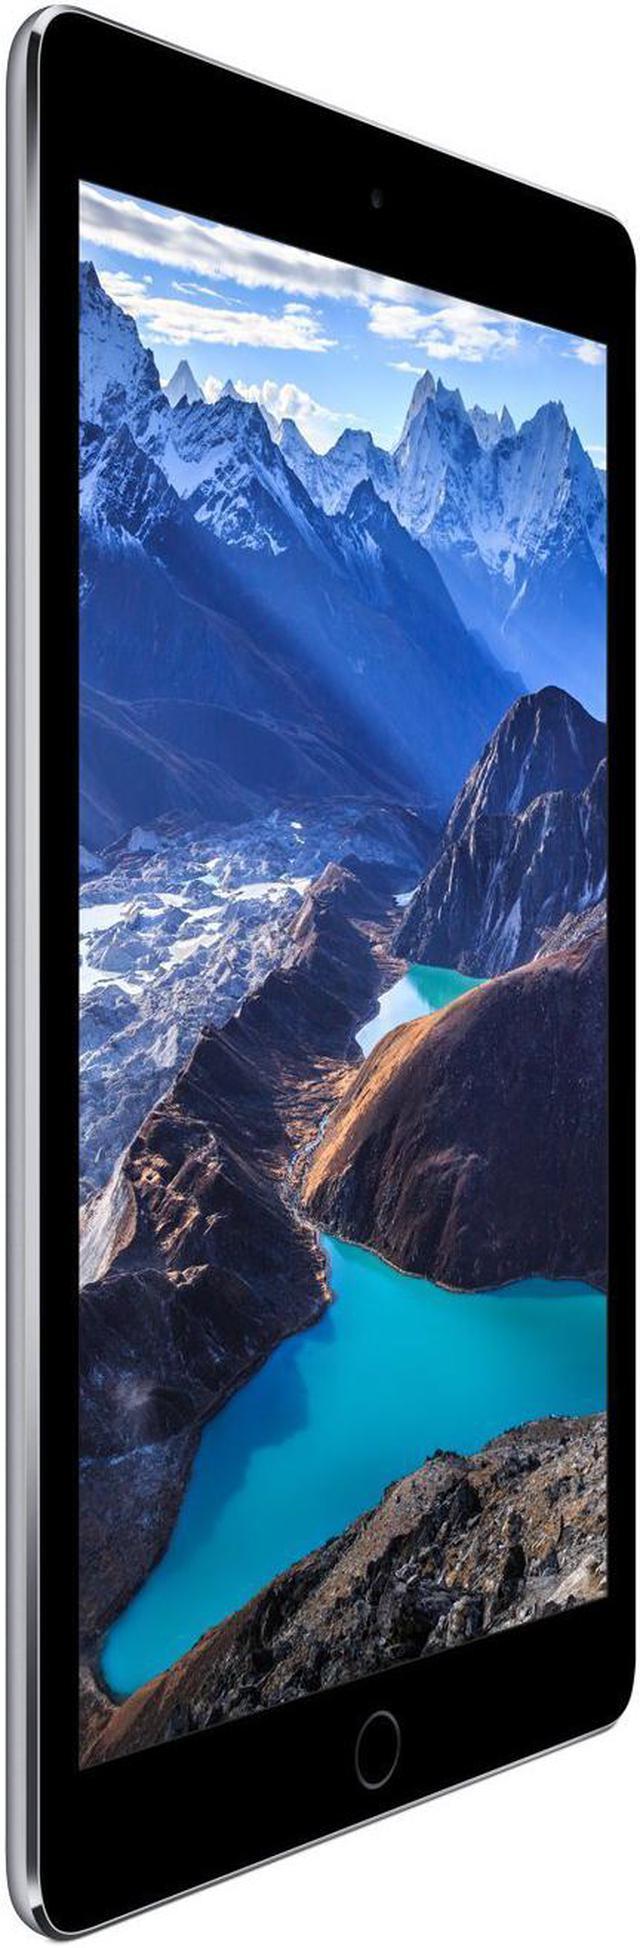 Refurbished: Apple iPad Air 2 16GB with Wi-Fi - Space Gray